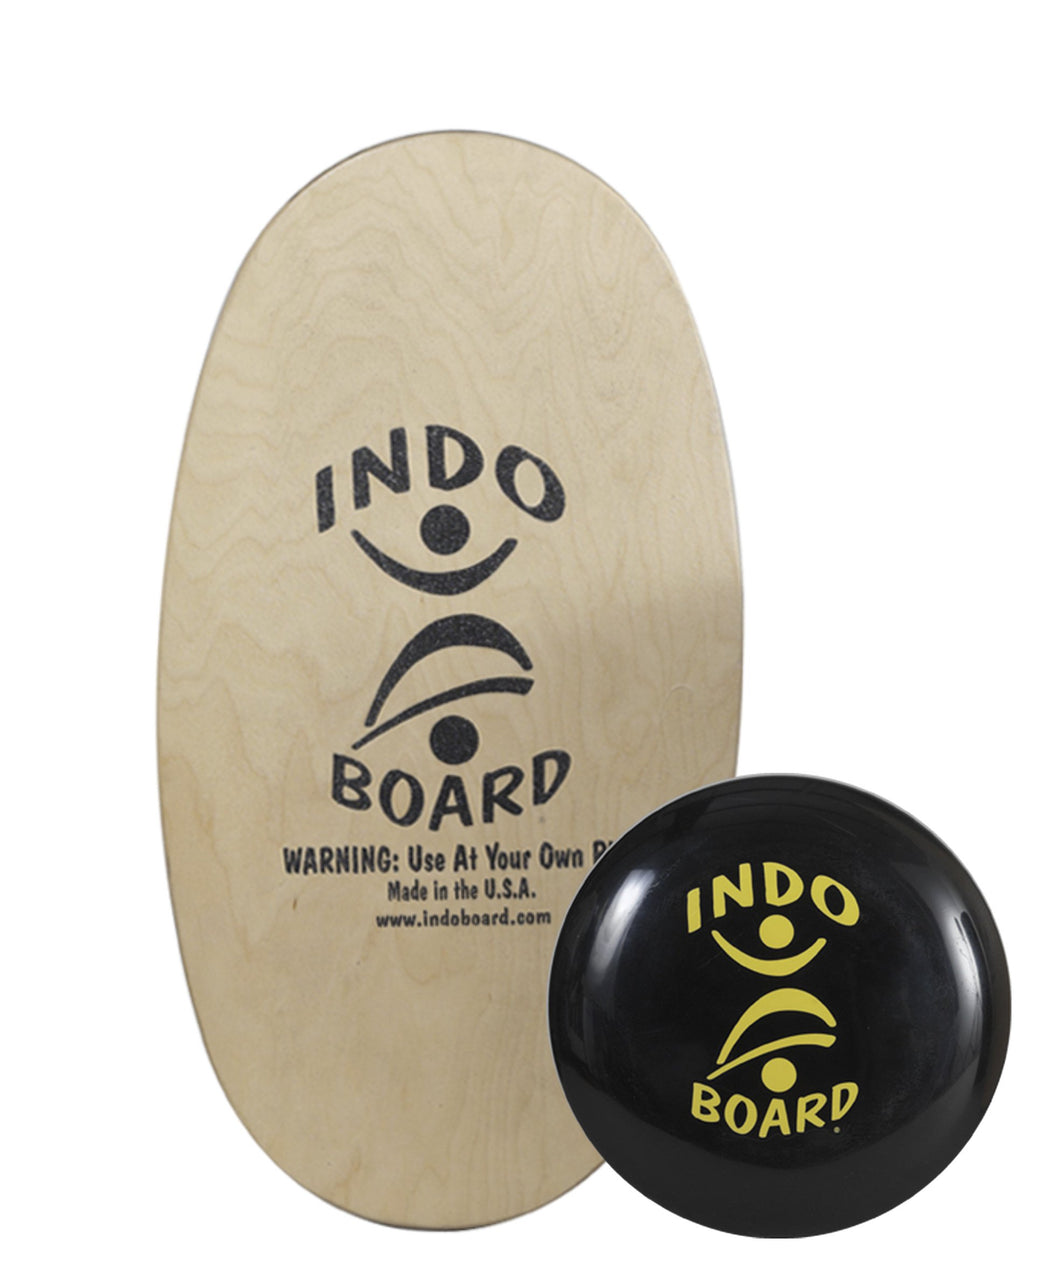 Indo FLO board & cushion